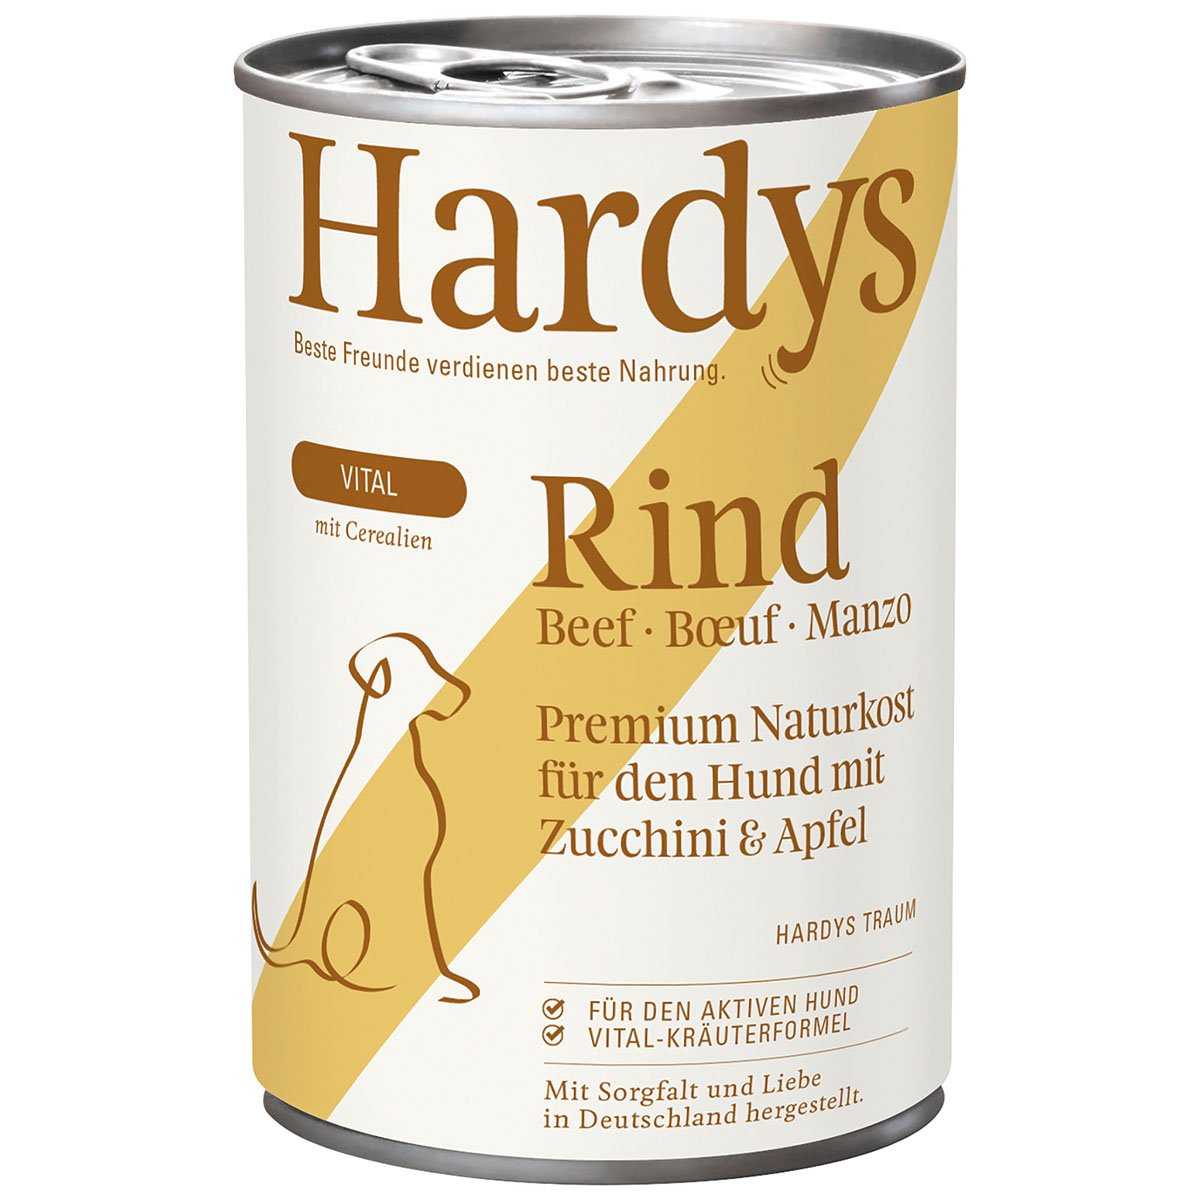 Hardys VITAL Rind mit Zucchini & Apfel 12x400g